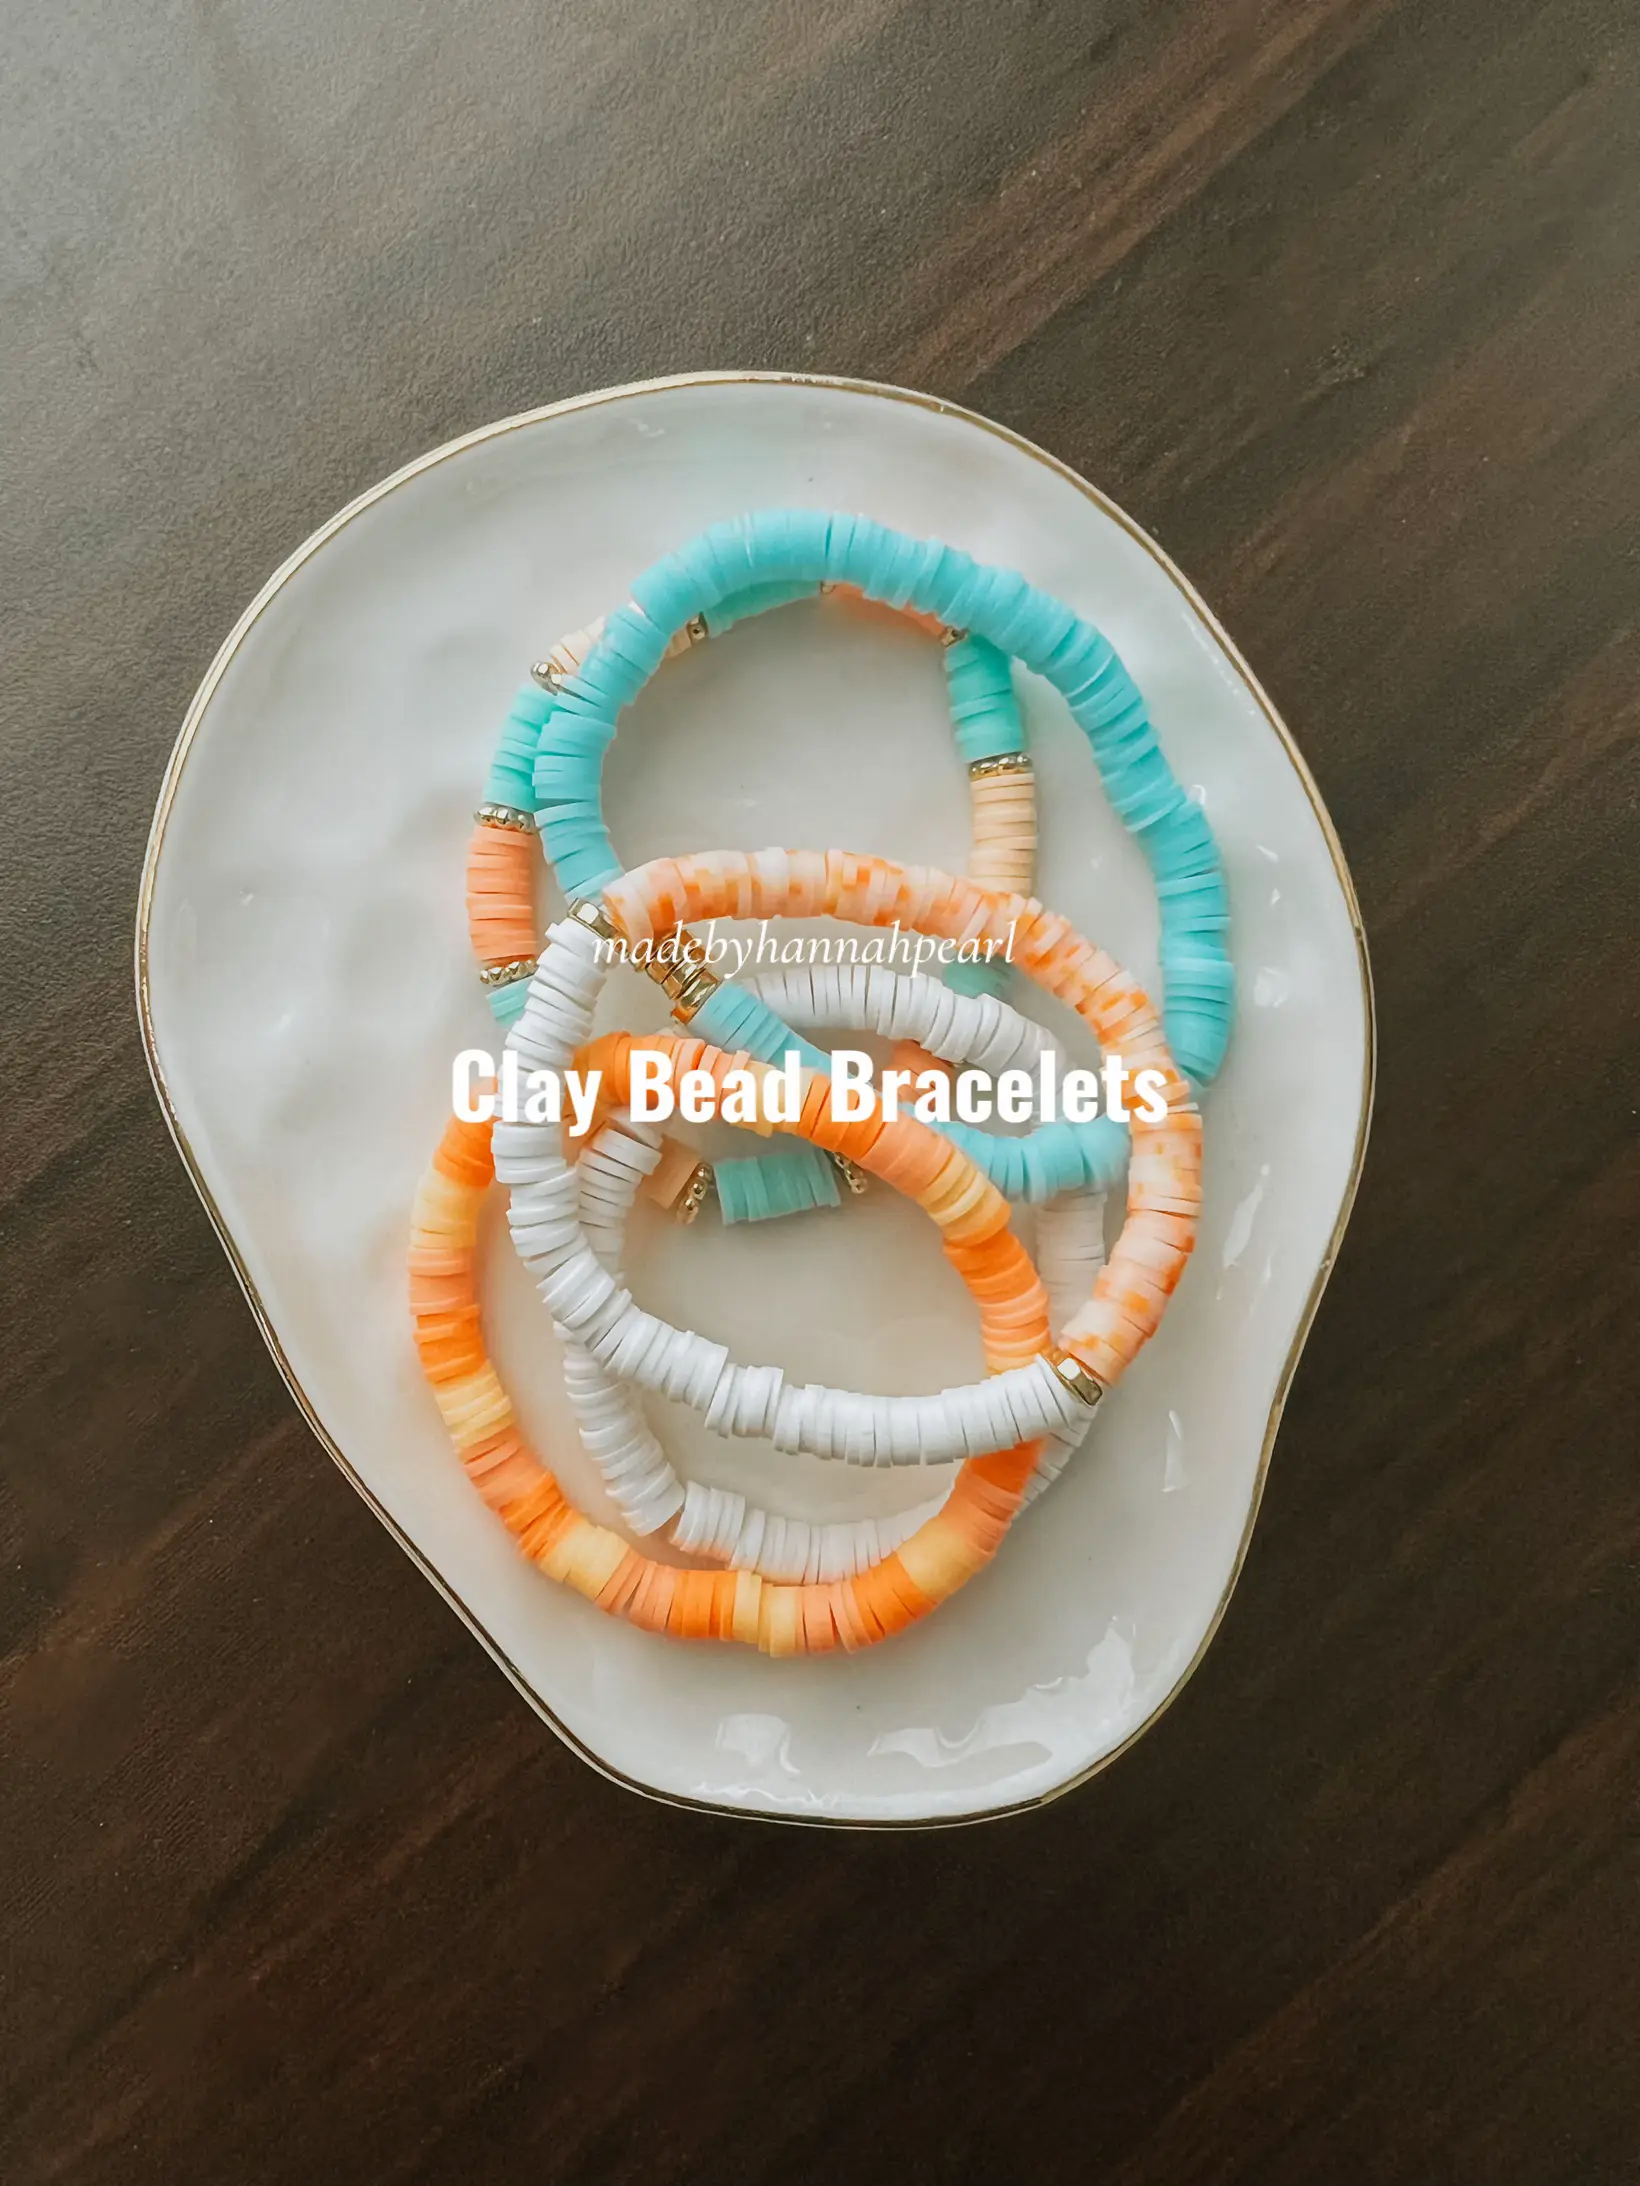 Bracelet letter beads, Shop Today. Get it Tomorrow!